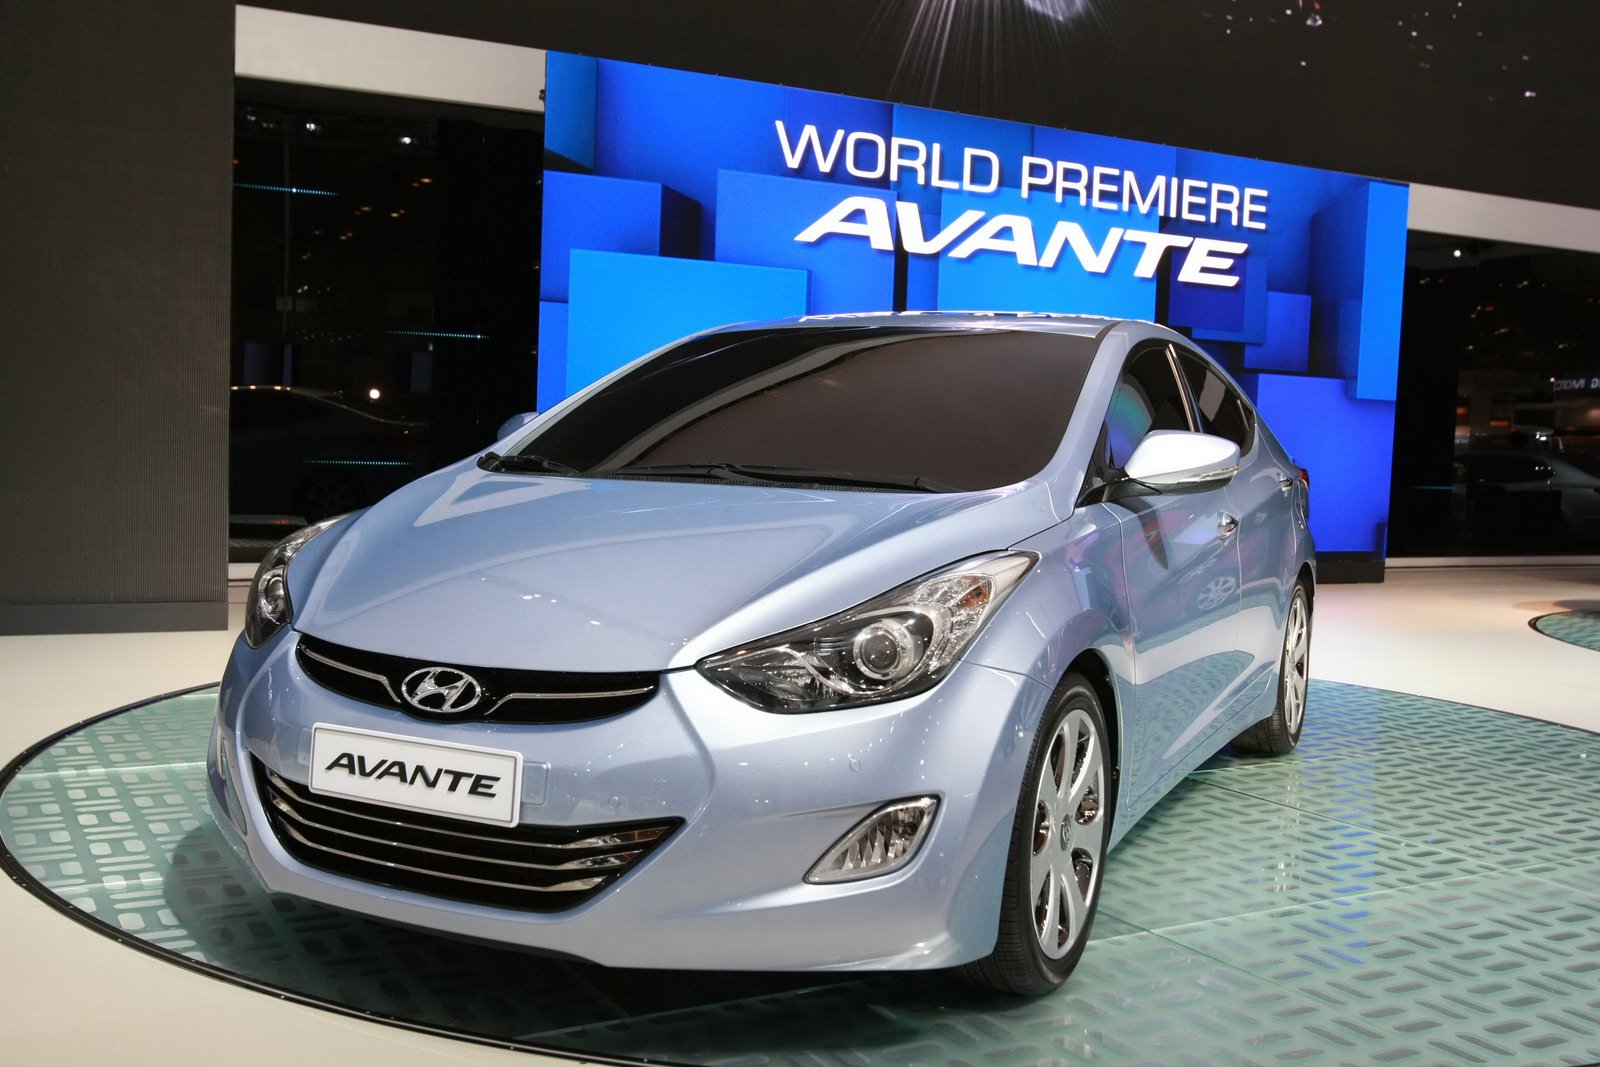 Hyundai Avante 2012 cũ - sedan nhỏ gọn, giá rẻ